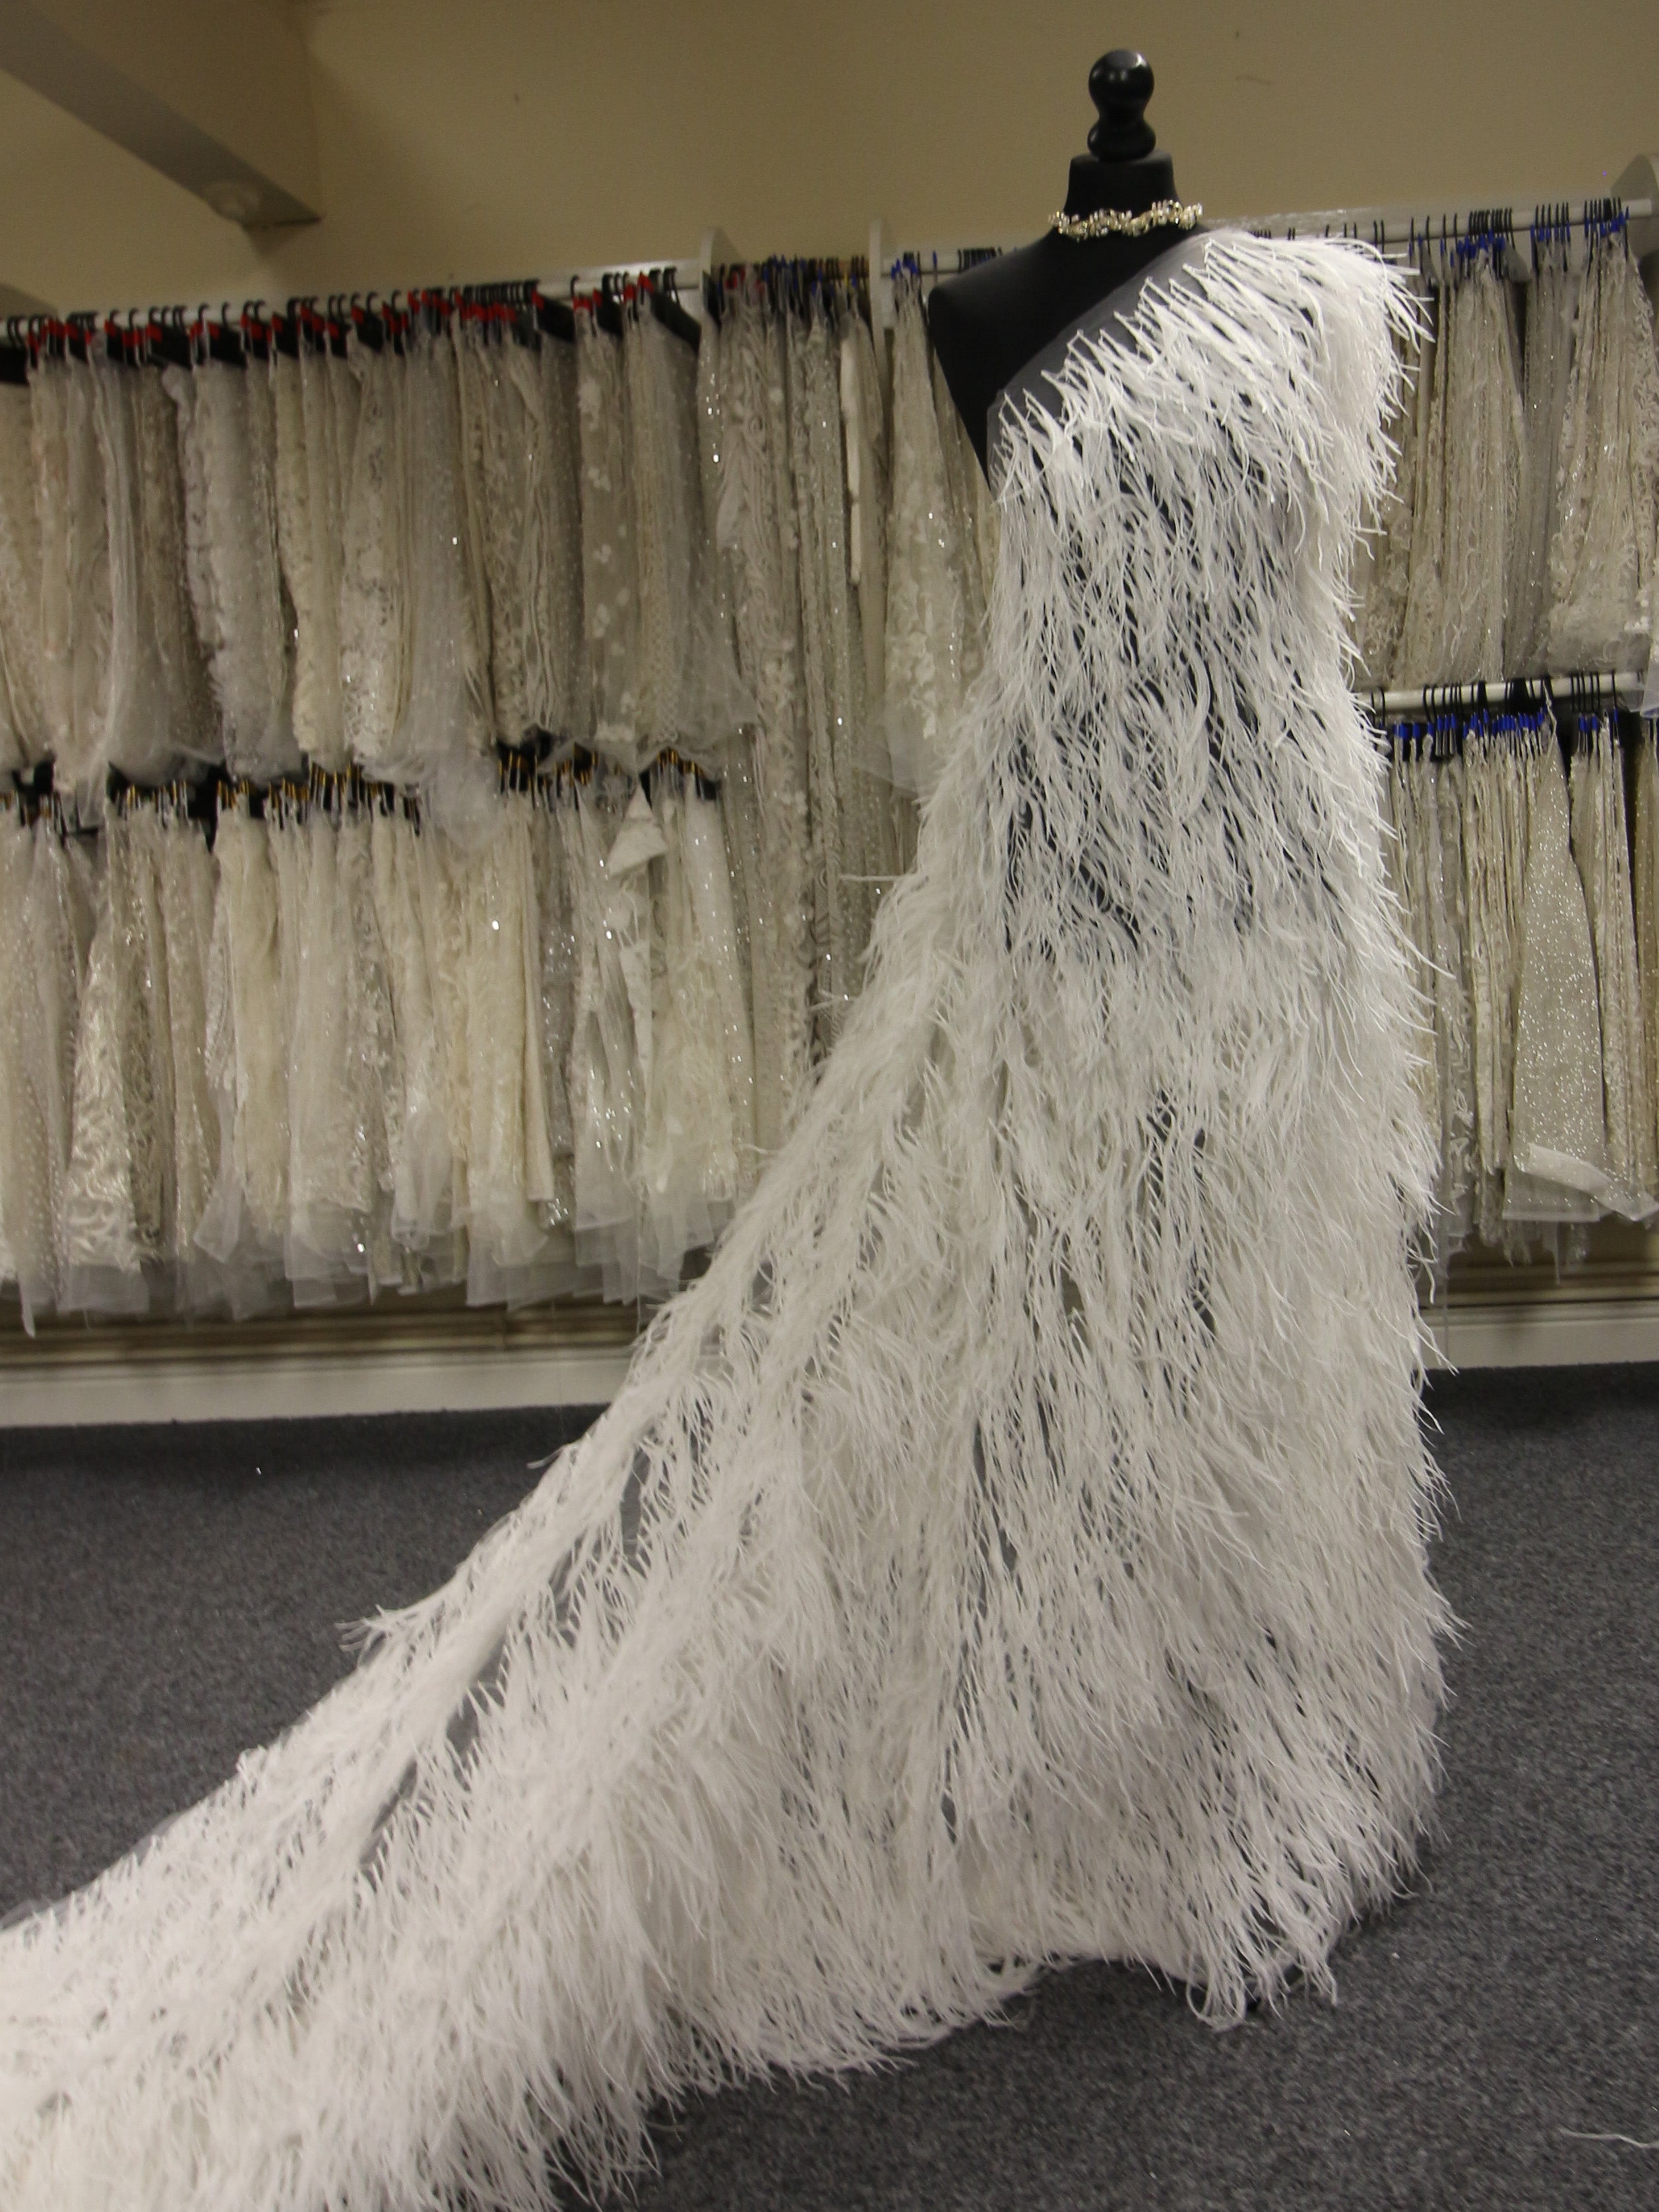 Lavani Couture - White lace & ostrich feather dress 🕊 #white #lace  #handmade #details #feathers #featherdress #ostrich #luxury #wedding  #bridal #bride #bridalcollection #atelier #lavanicouture